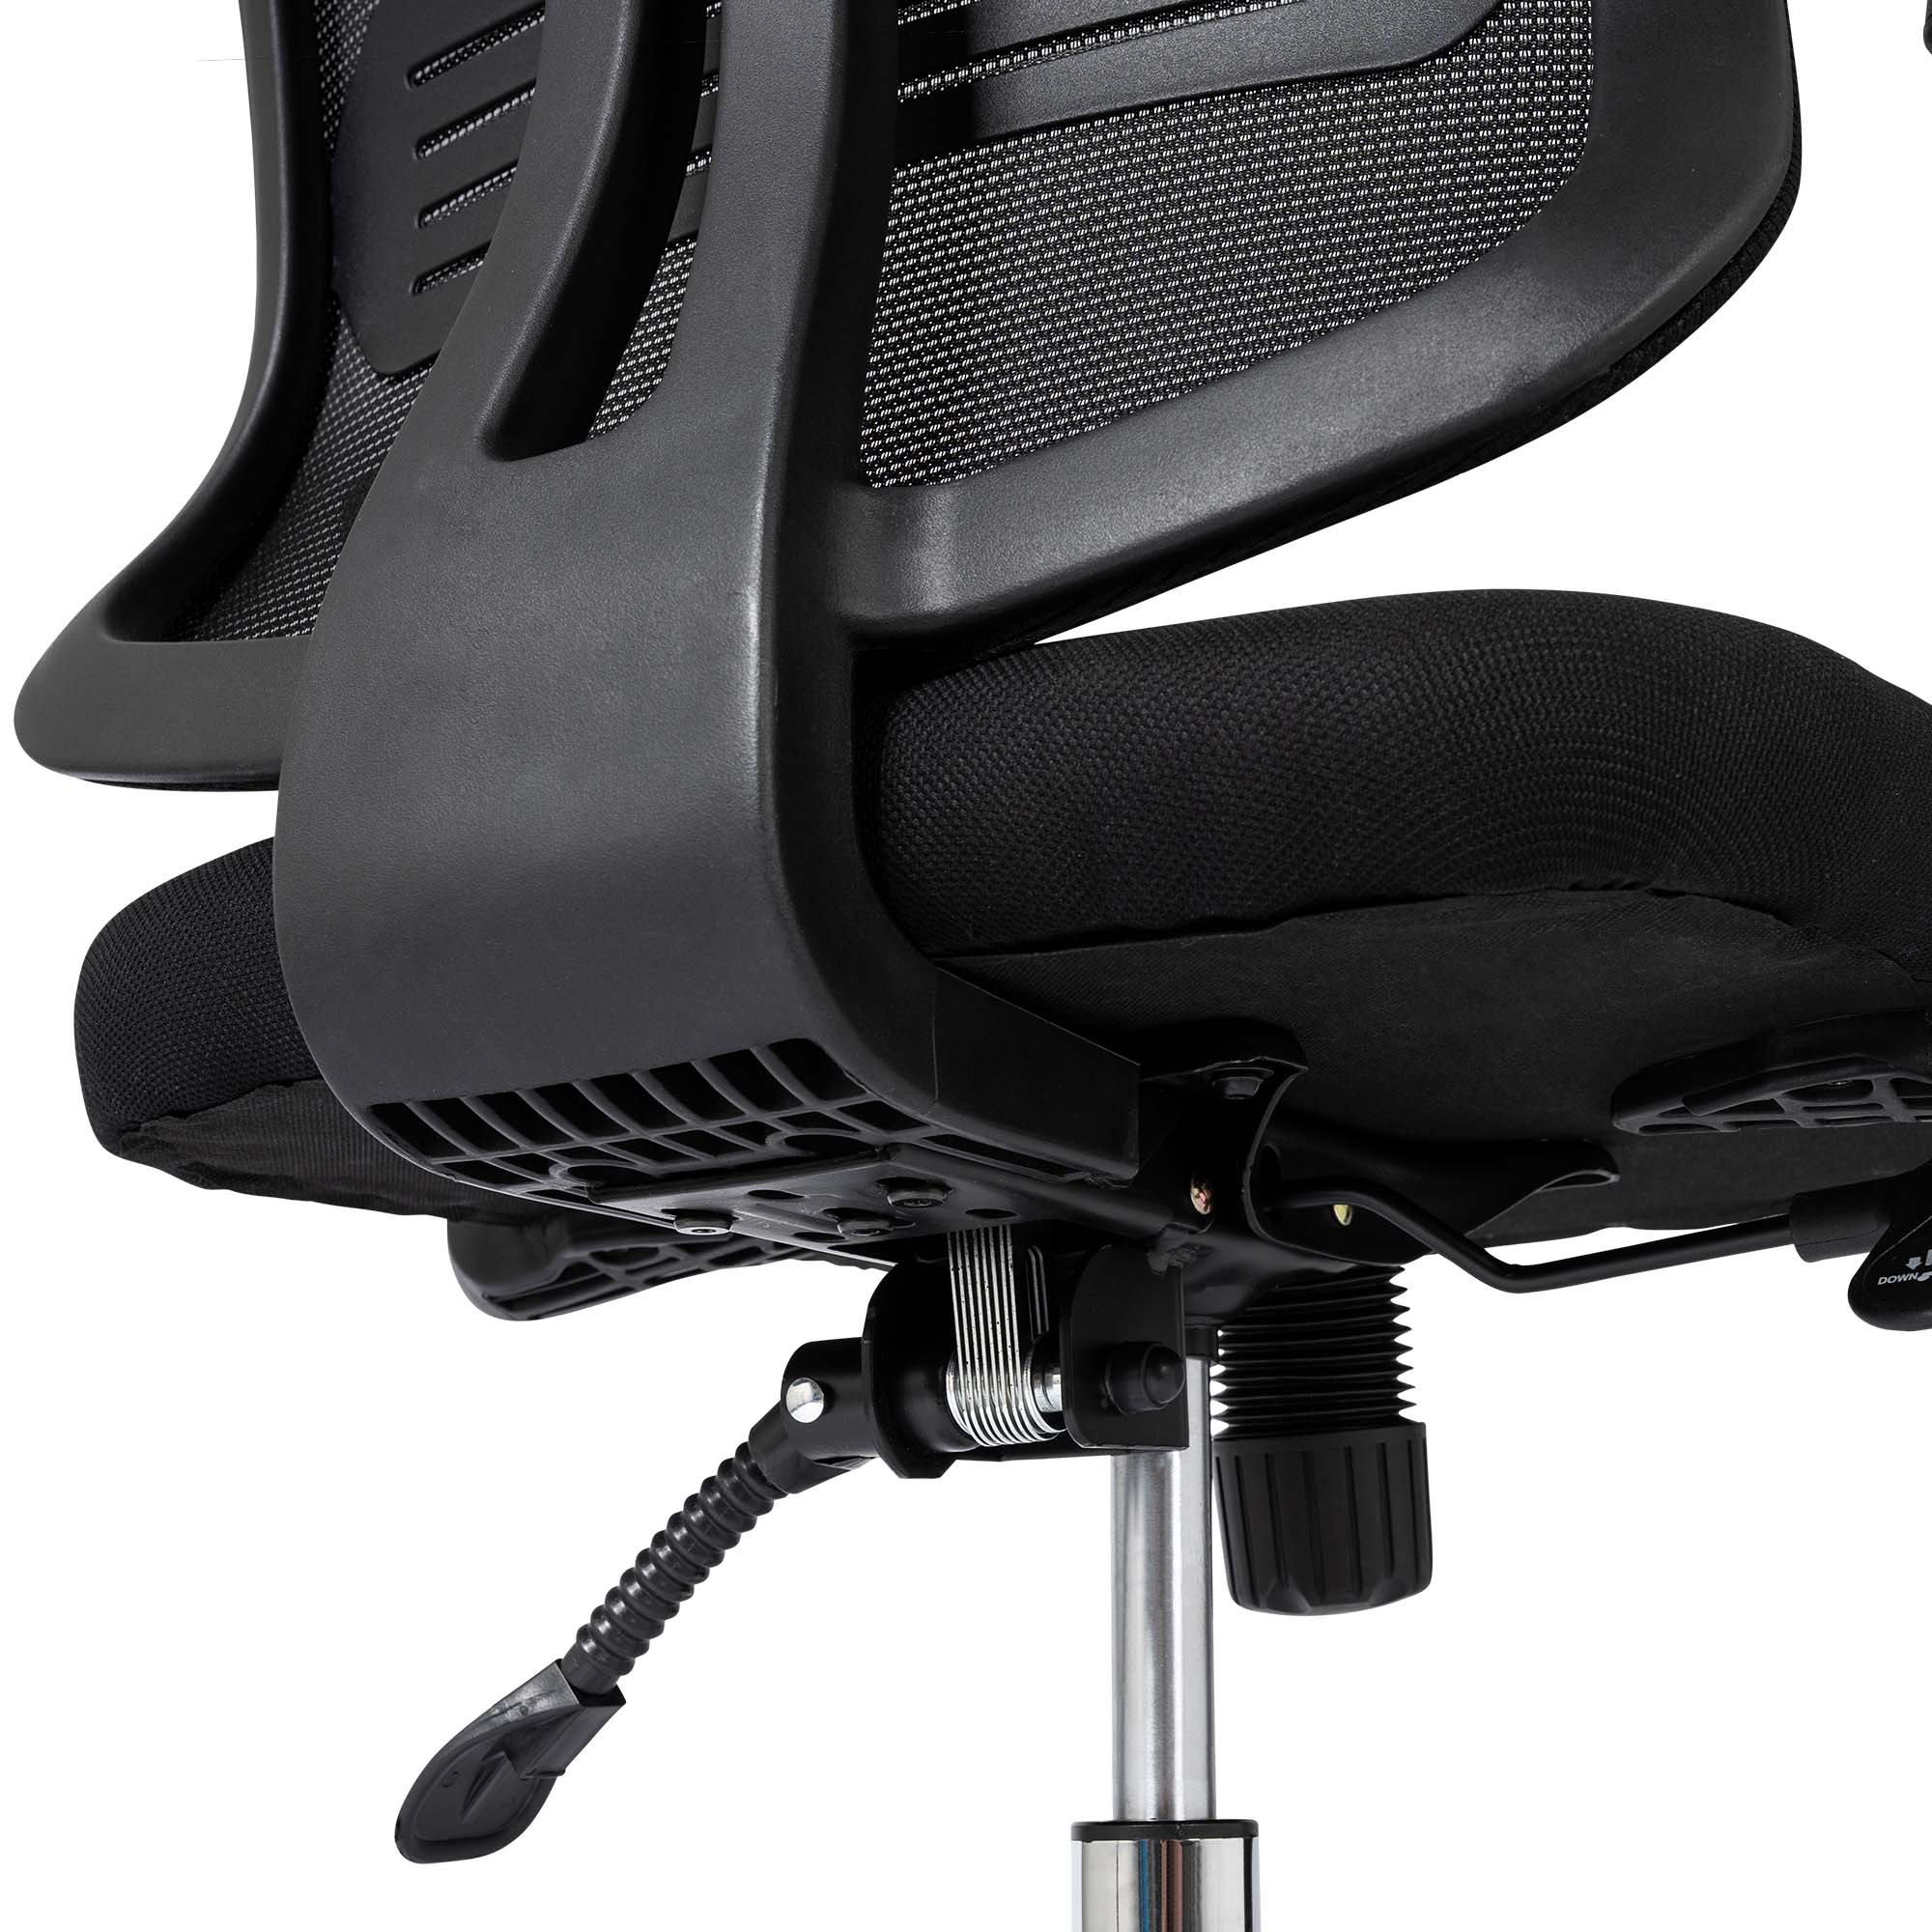 Ergodu Office Chair with Adjustable Armrests underside